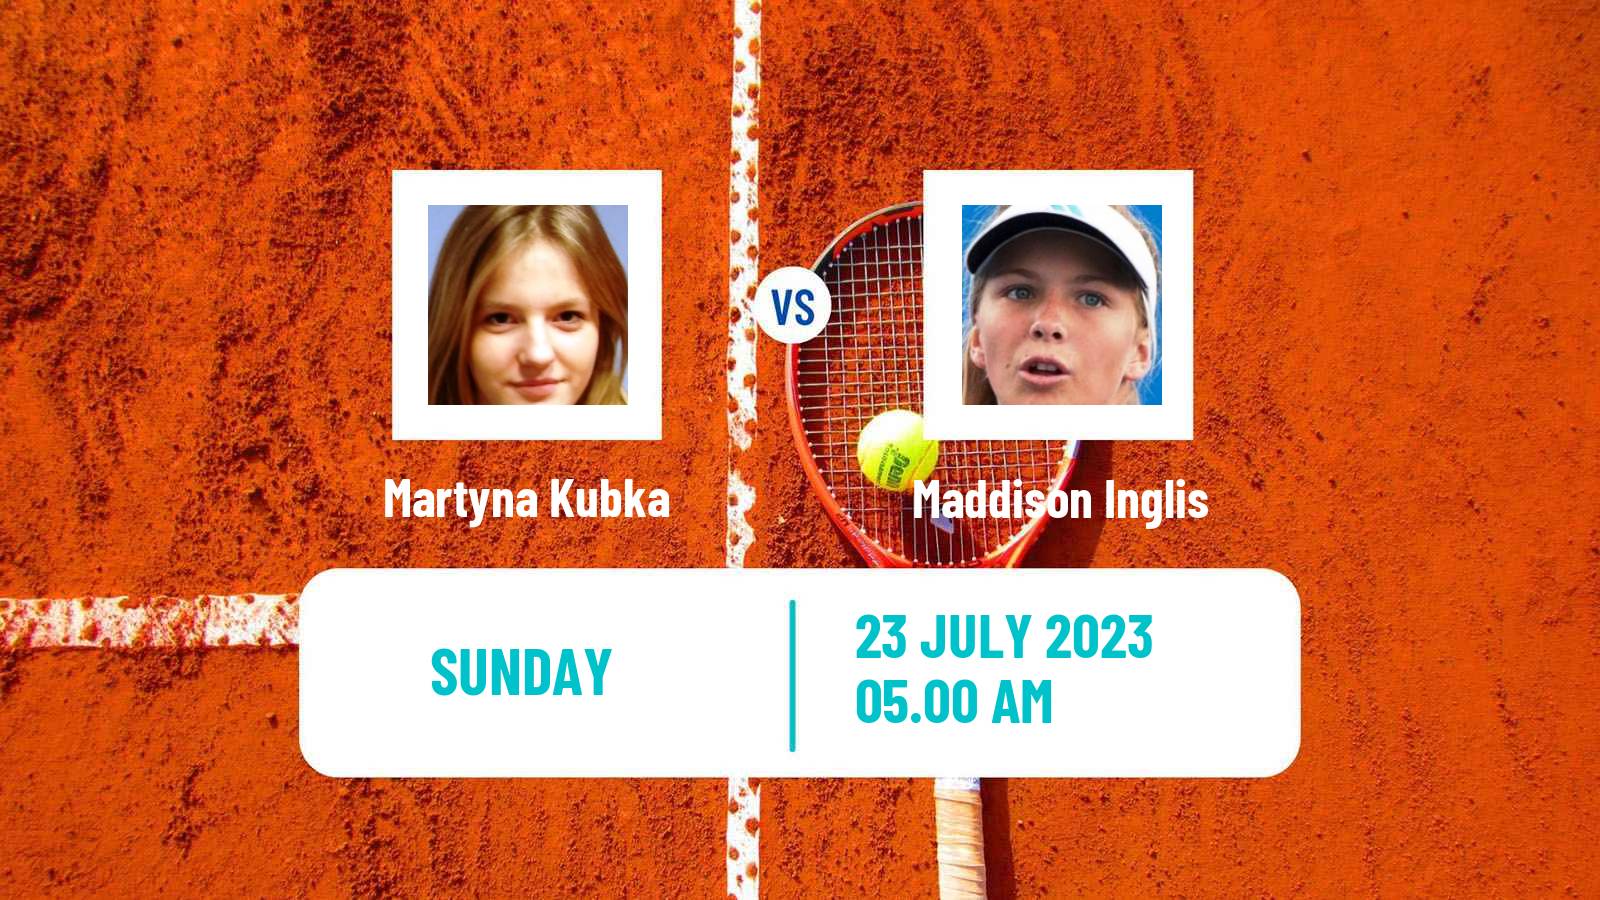 Tennis WTA Warsaw Martyna Kubka - Maddison Inglis